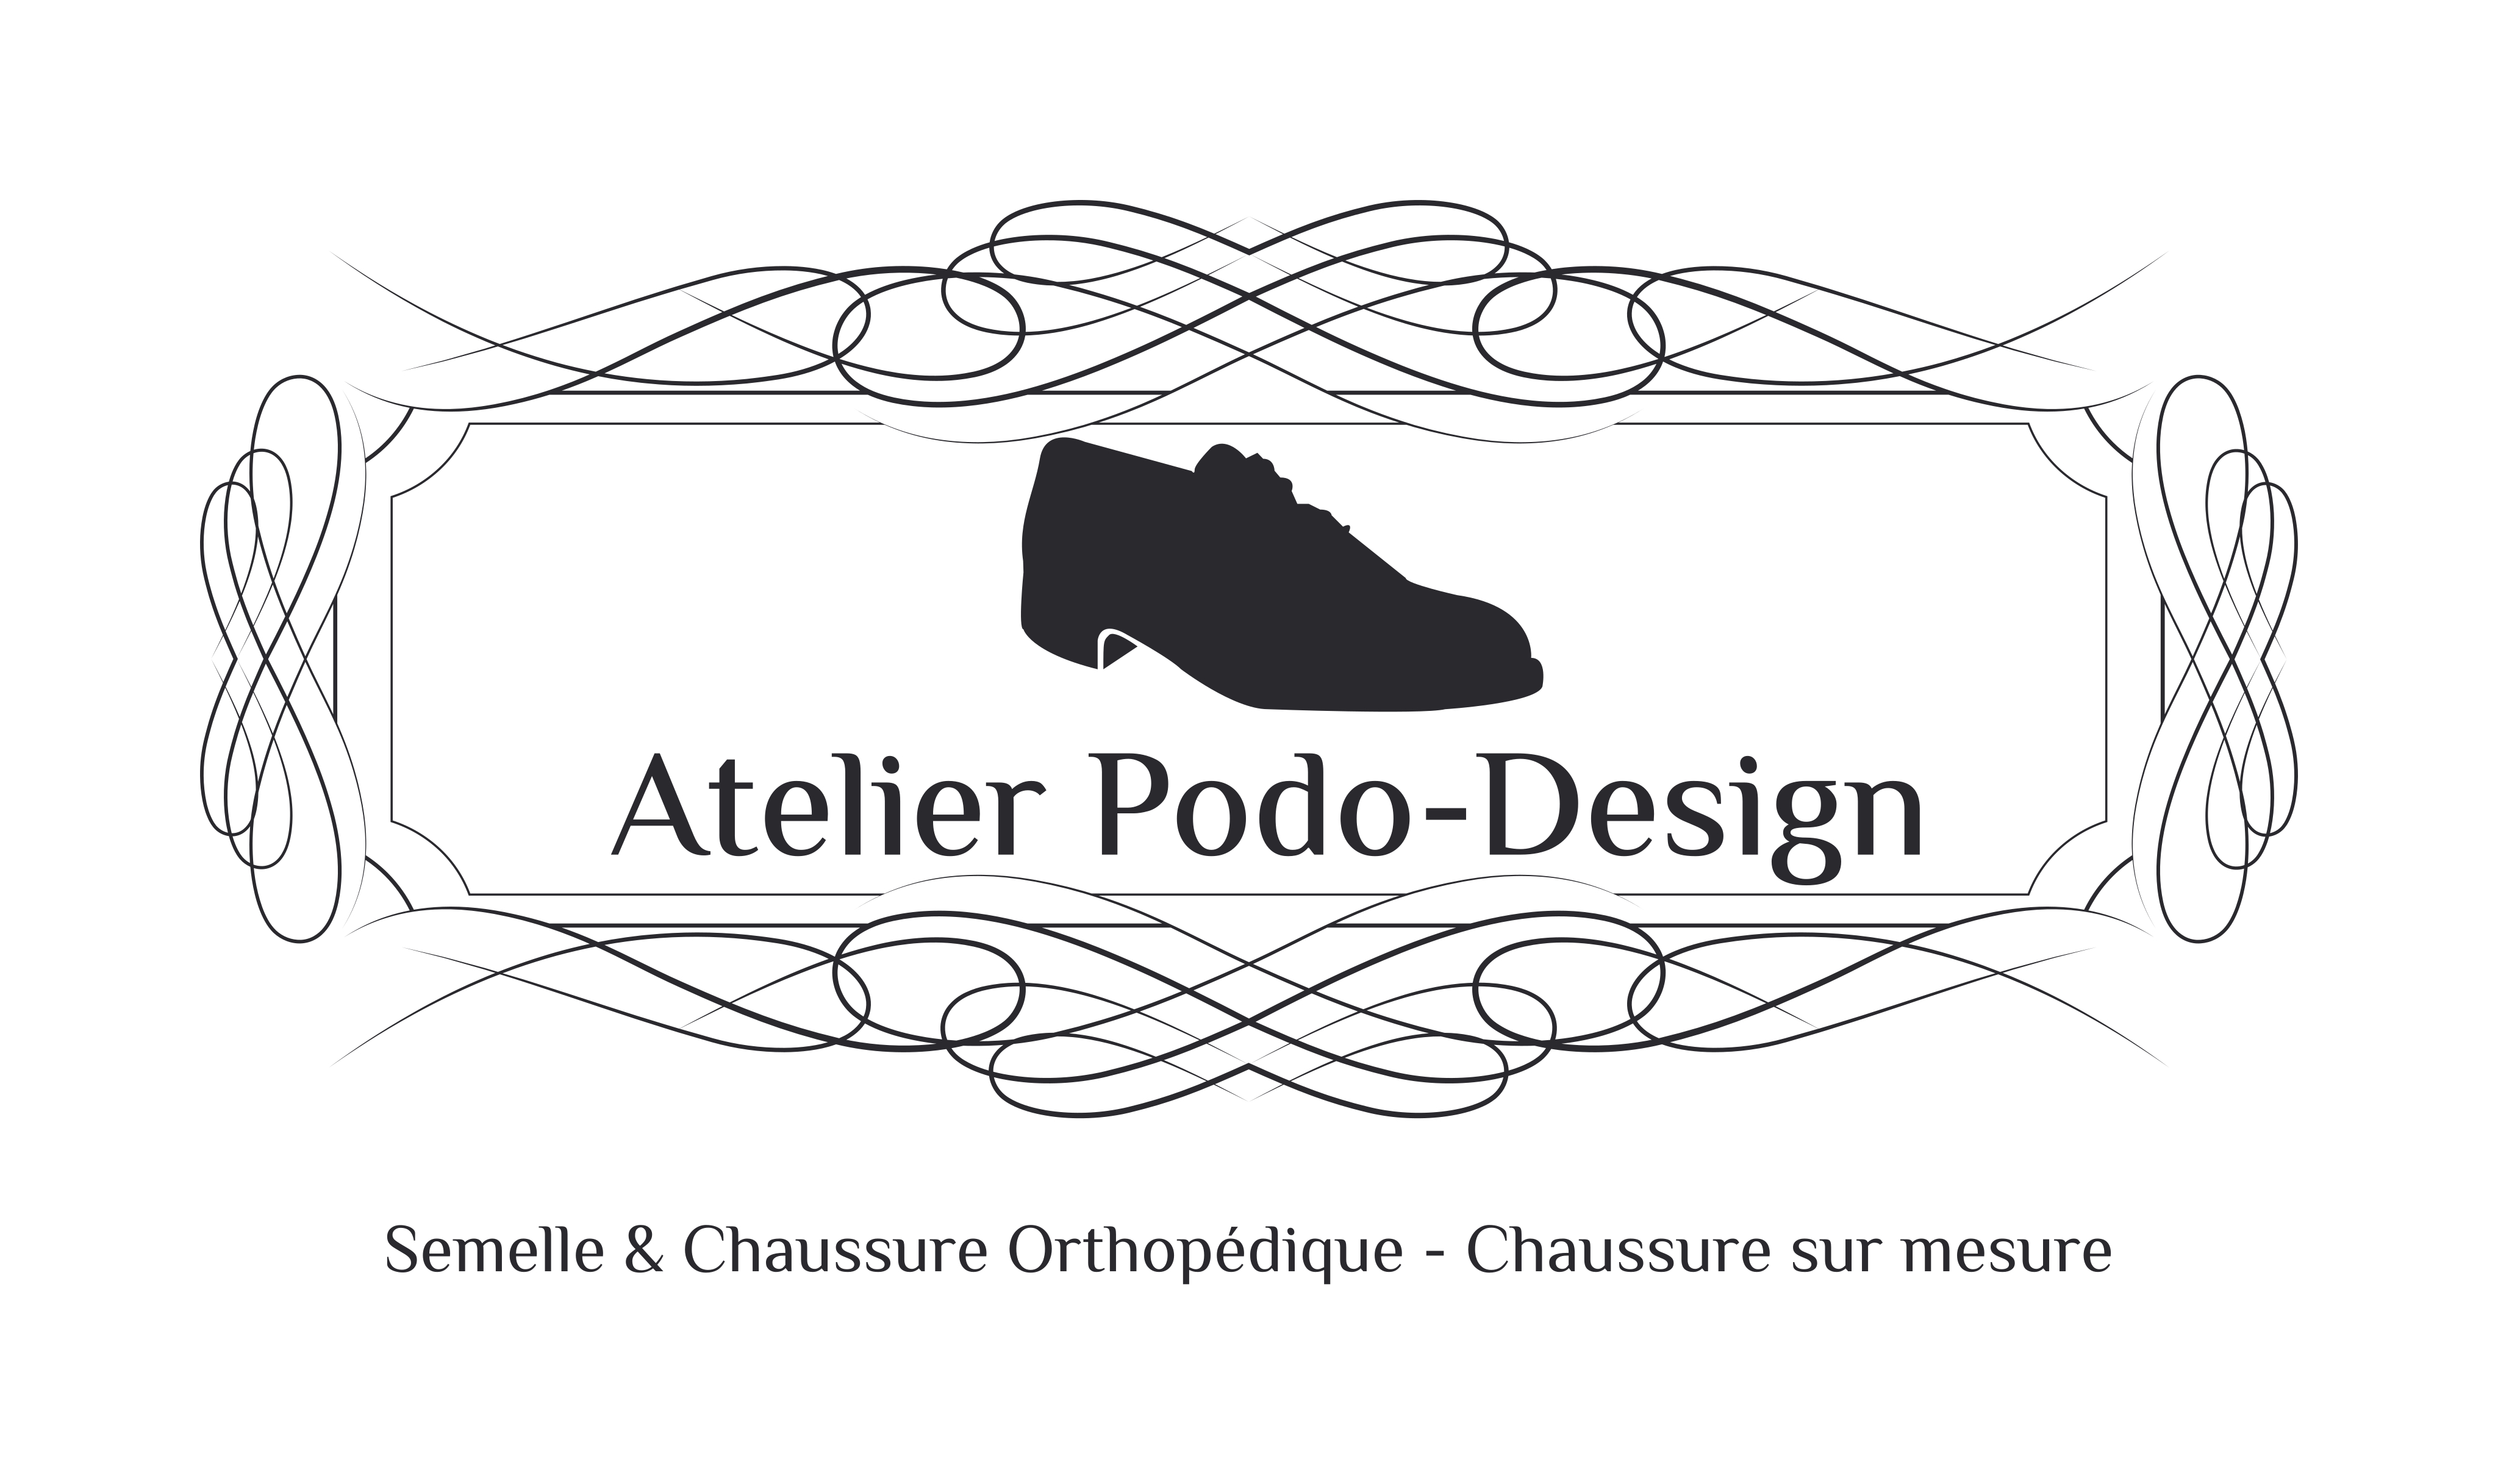 Atelier Podo-Design